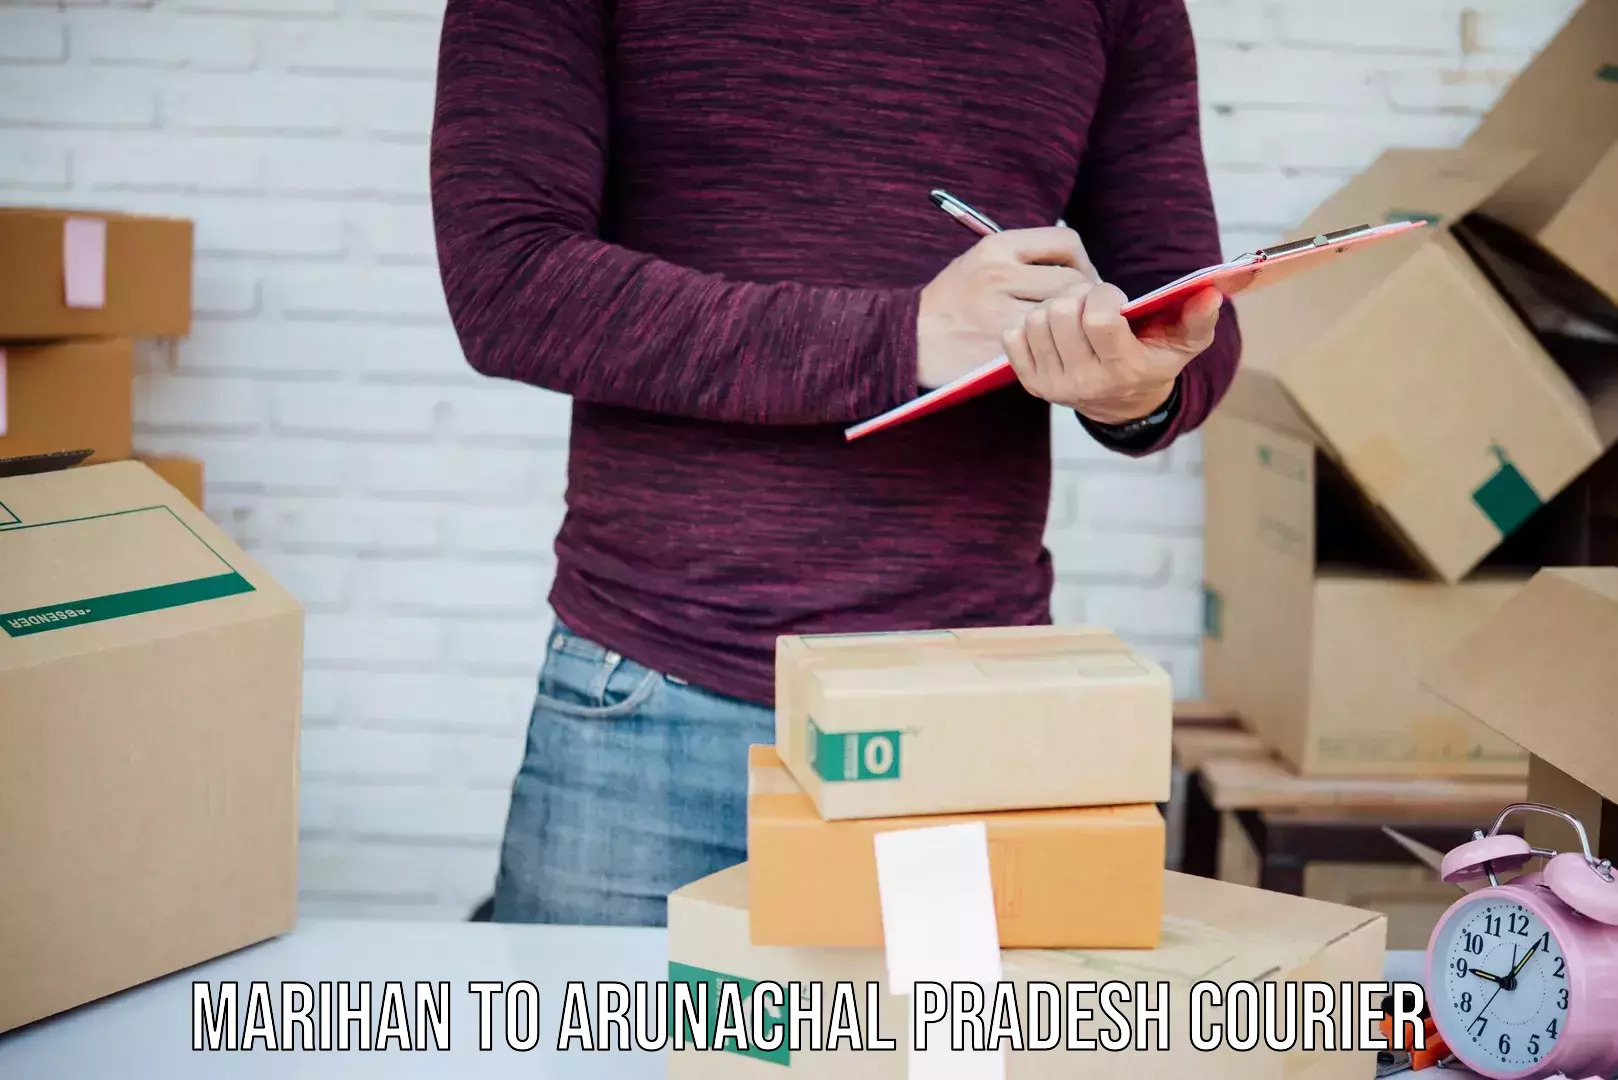 Package delivery network Marihan to Arunachal Pradesh